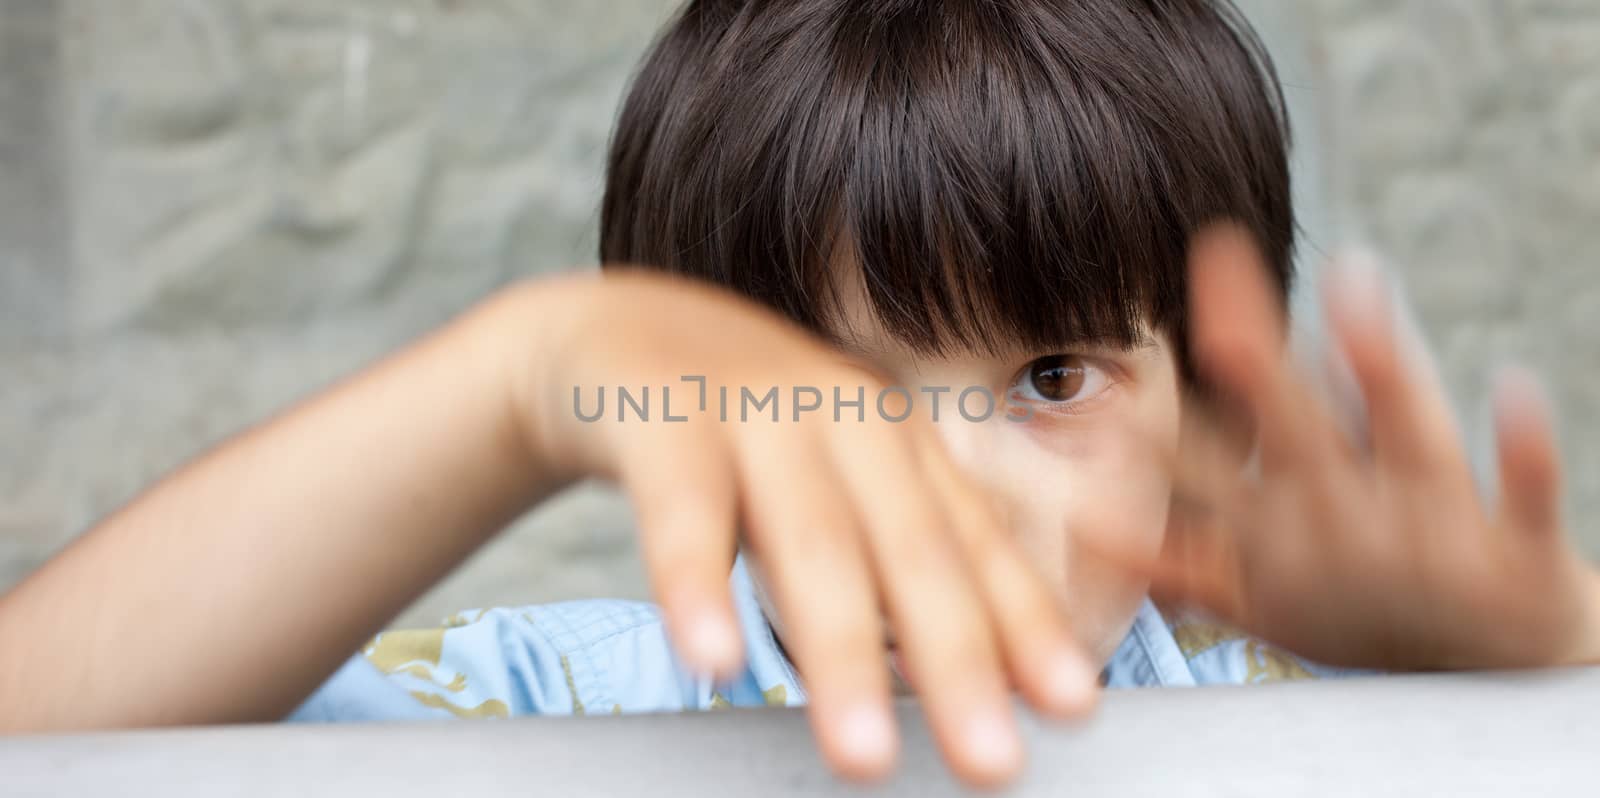 little boy in expression, close-up portrait